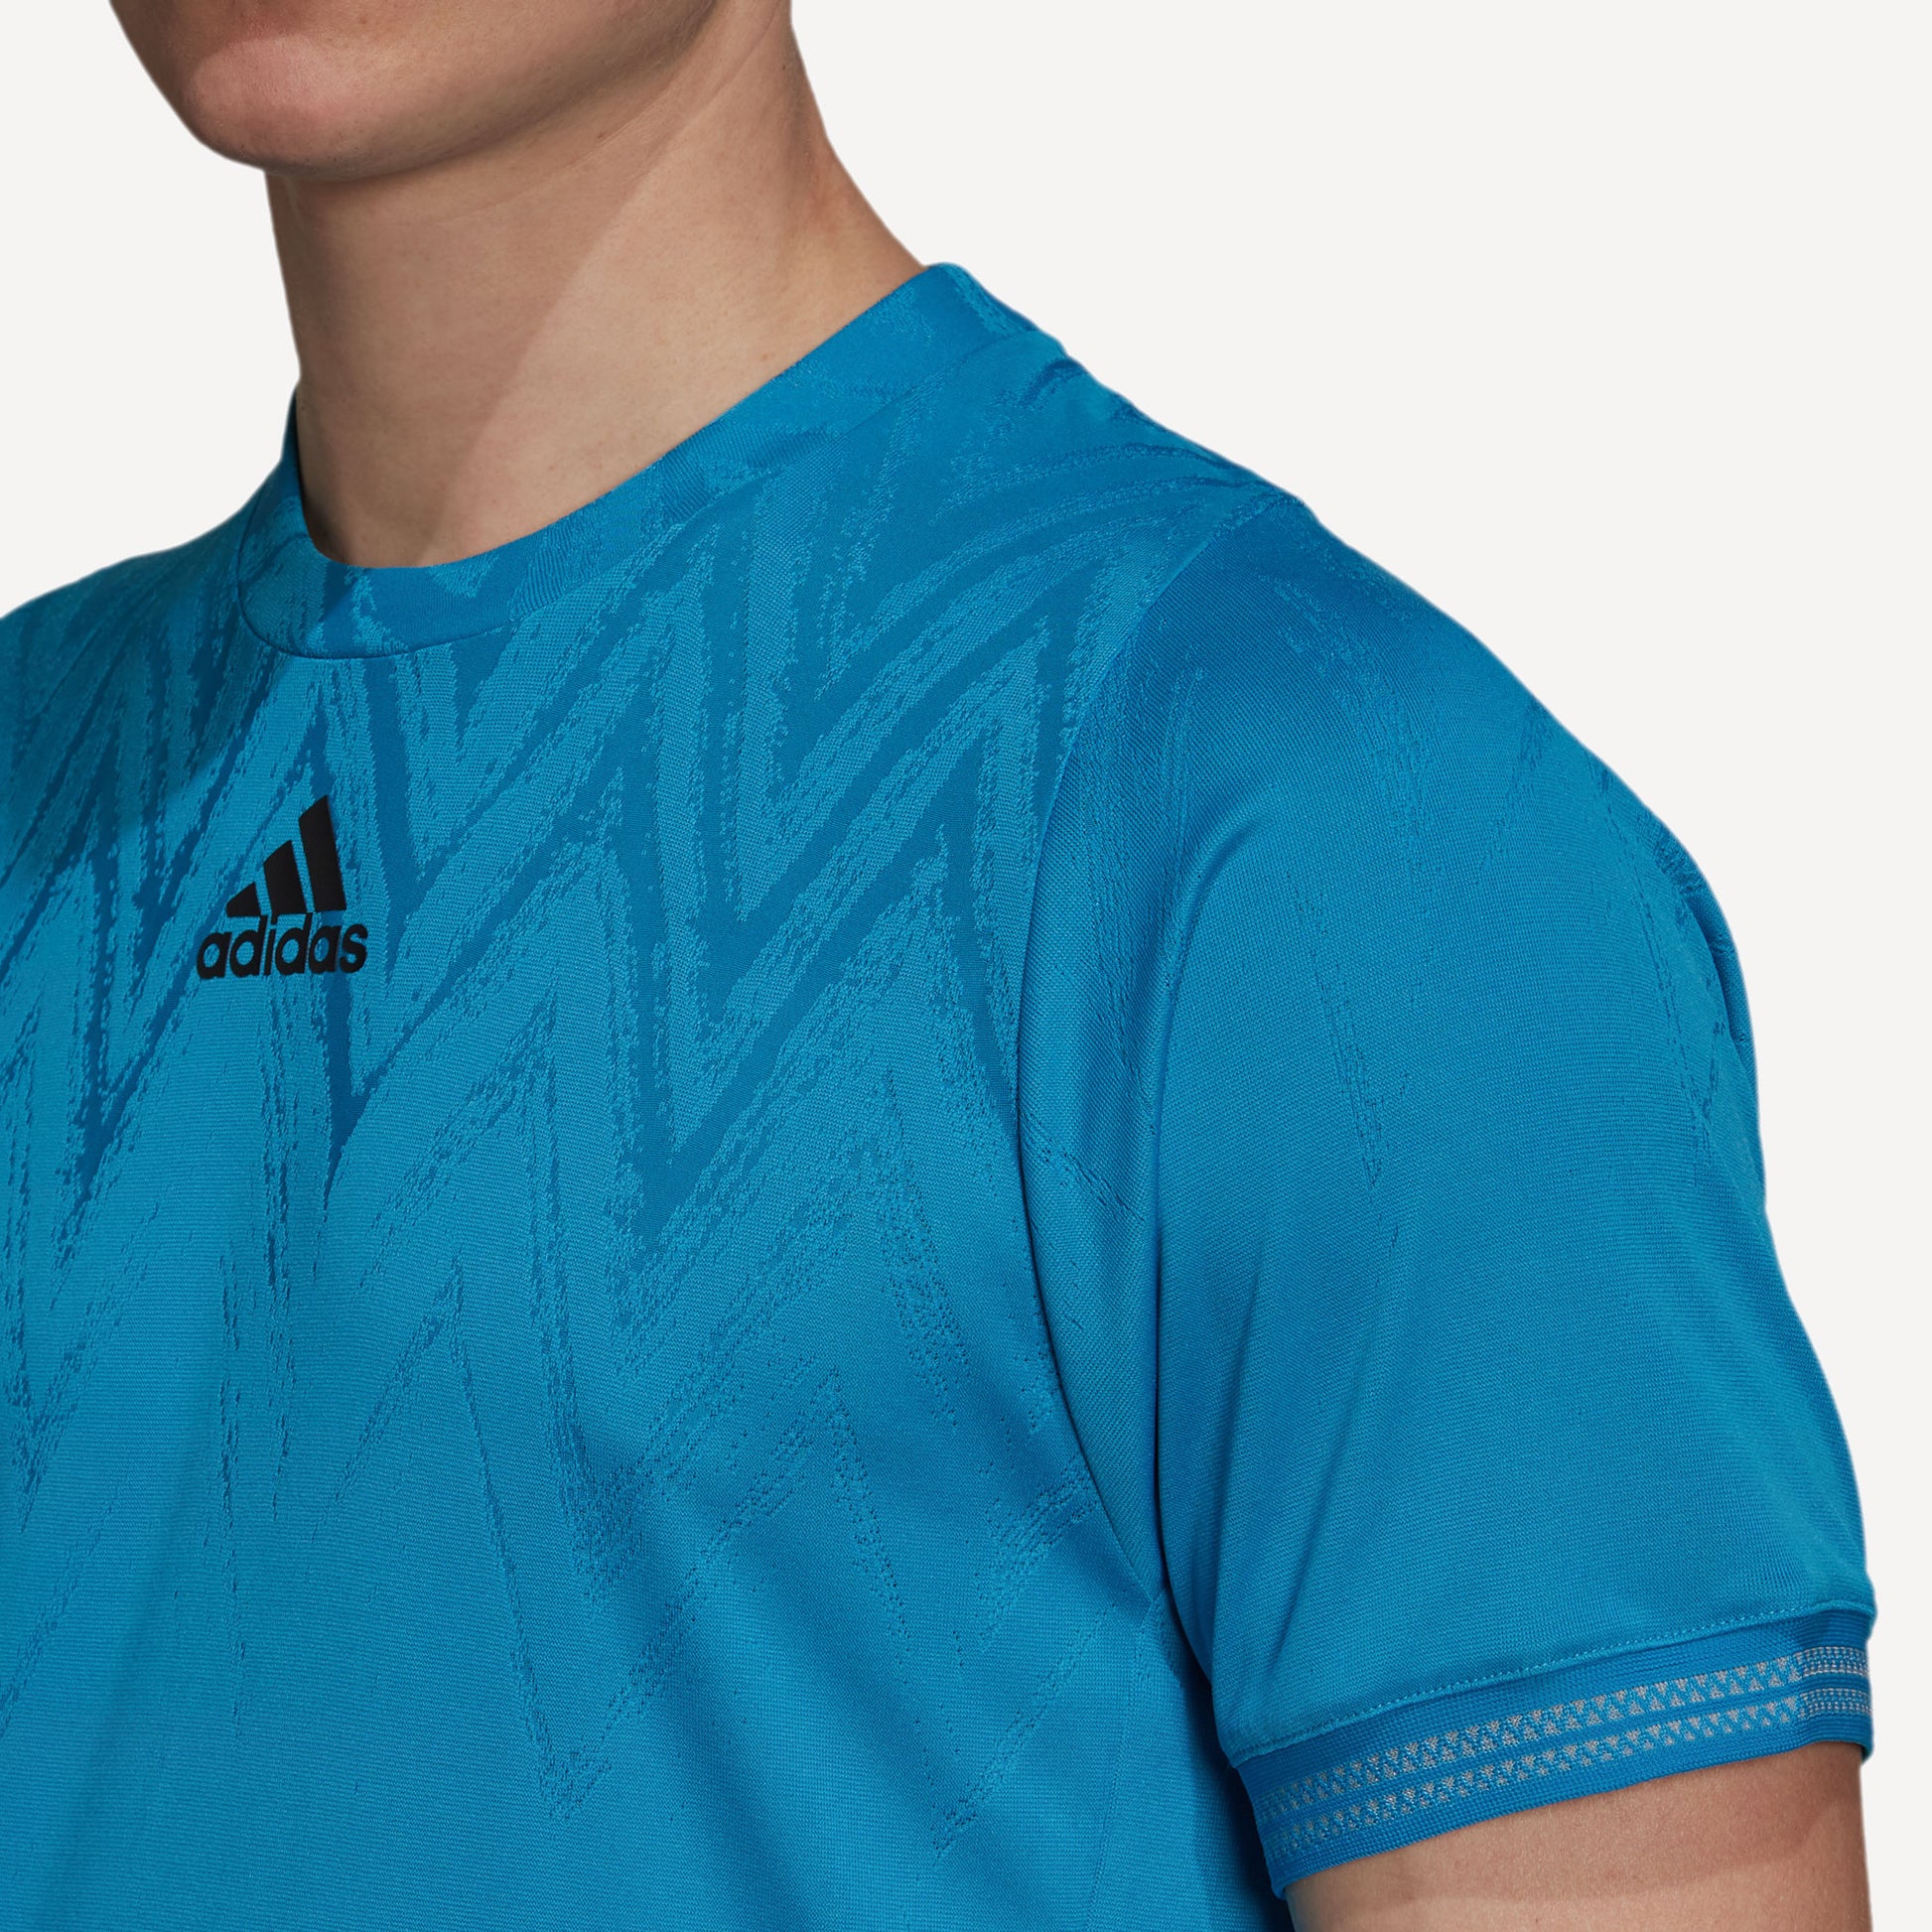 adidas Freelift Primeblue Men's Tennis Shirt Blue (4)